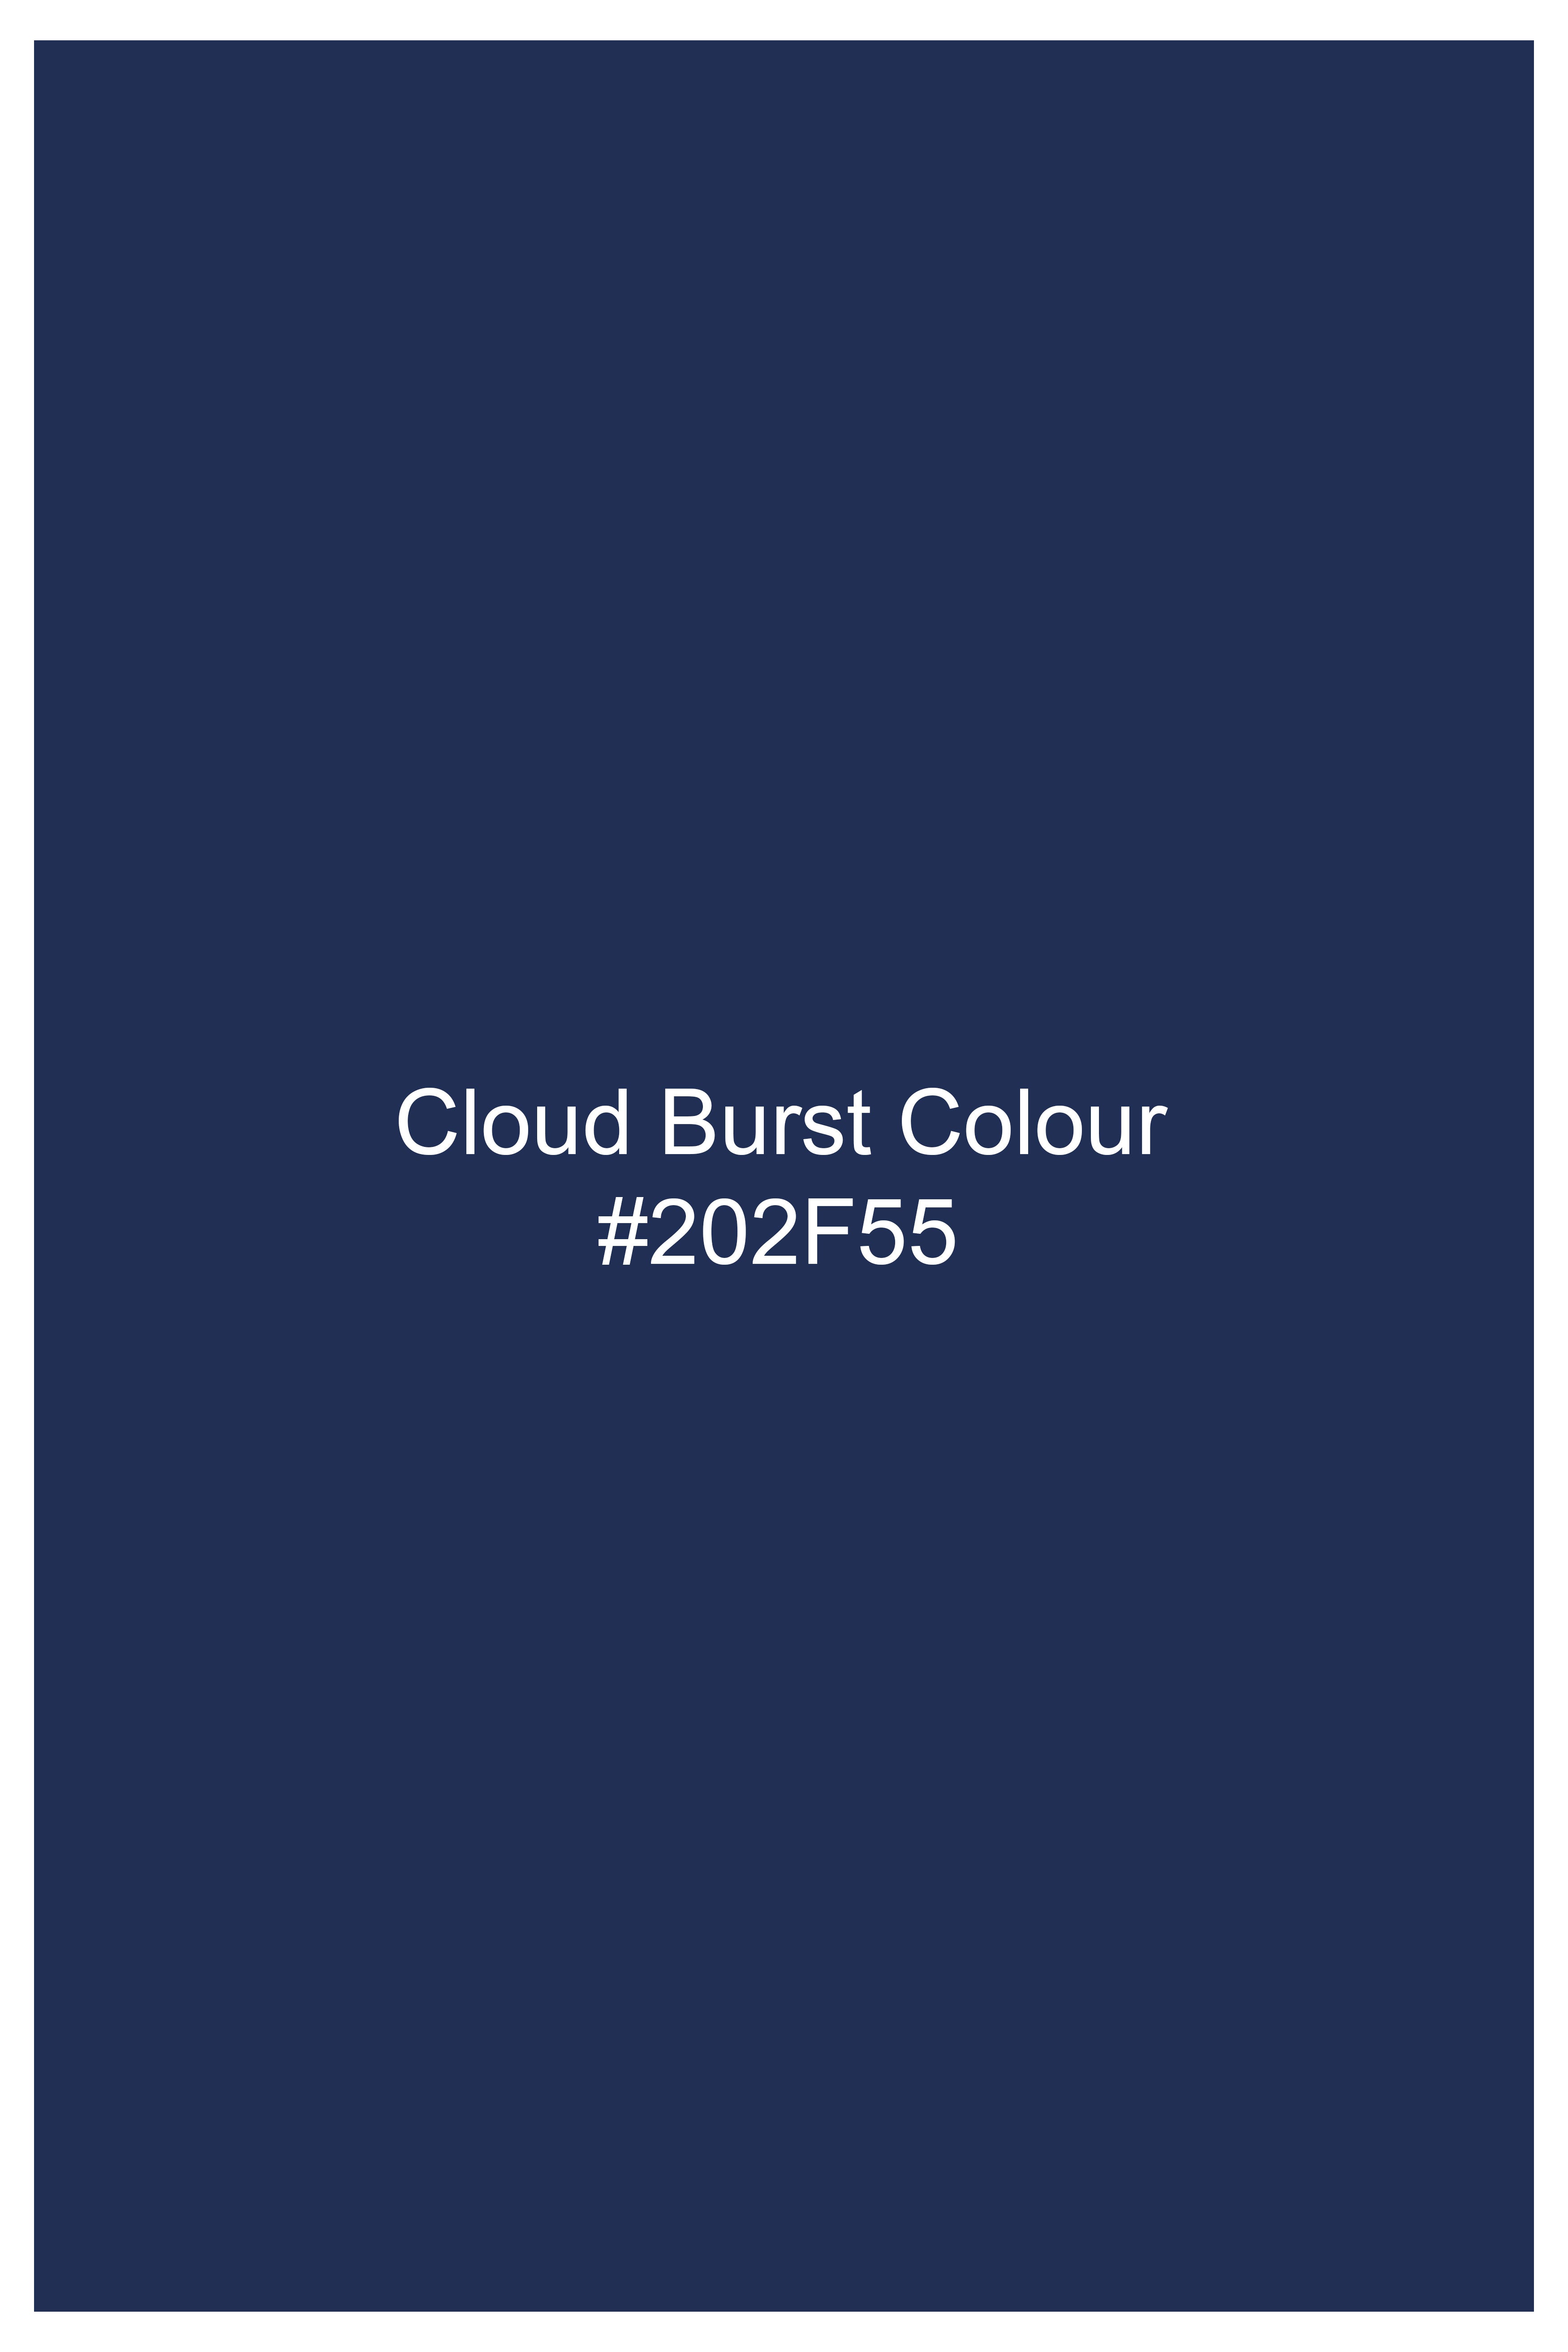 Cloud Burst Blue Wool Rich Designer Blazer BL3055-SB-D394-36, BL3055-SB-D394-38, BL3055-SB-D394-40, BL3055-SB-D394-42, BL3055-SB-D394-44, BL3055-SB-D394-46, BL3055-SB-D394-48, BL3055-SB-D394-50, BL3055-SB-D394-52, BL3055-SB-D394-54, BL3055-SB-D394-56, BL3055-SB-D394-58, BL3055-SB-D394-60